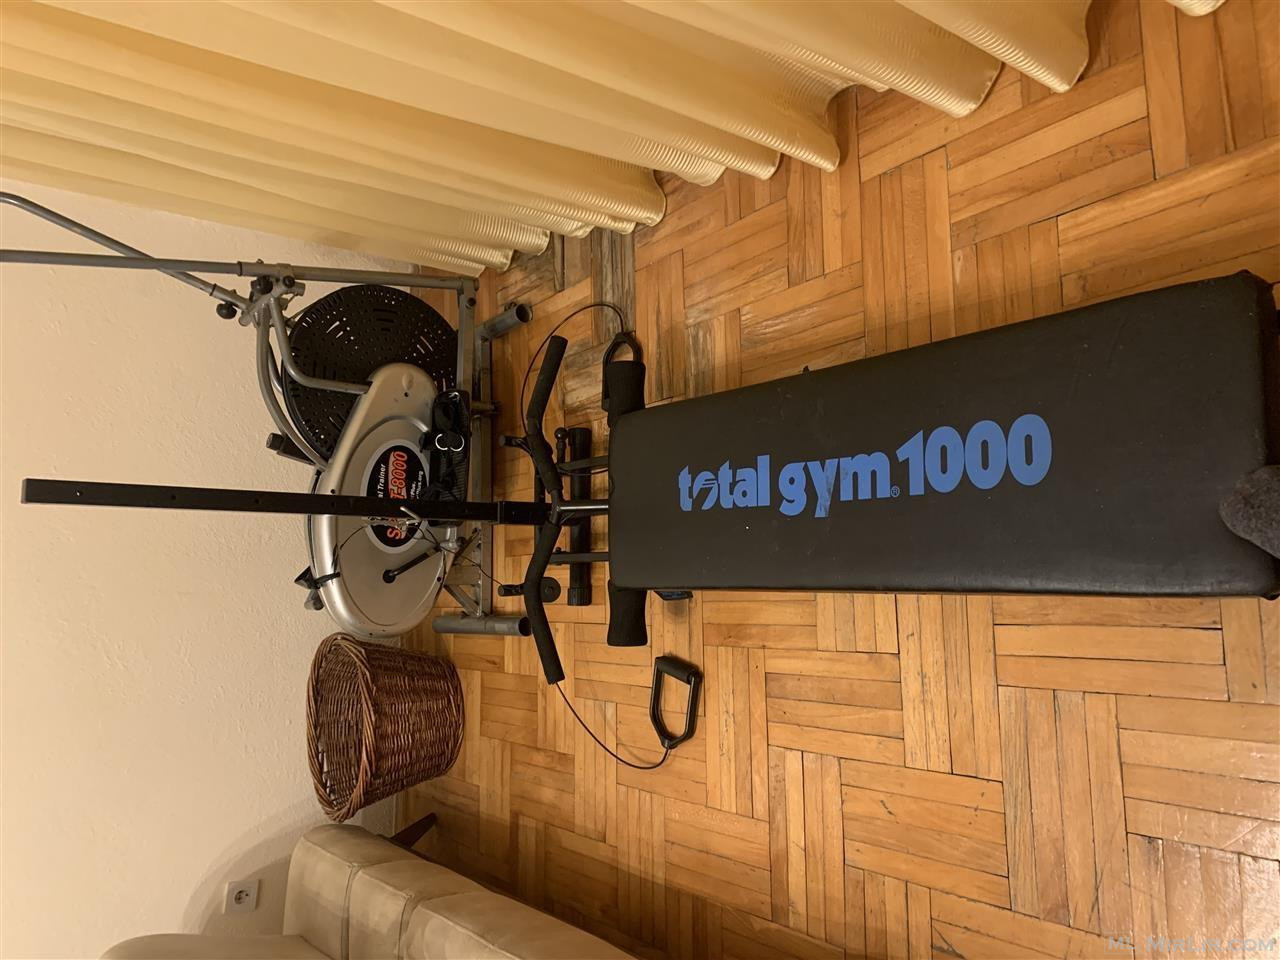 total Gym 1000